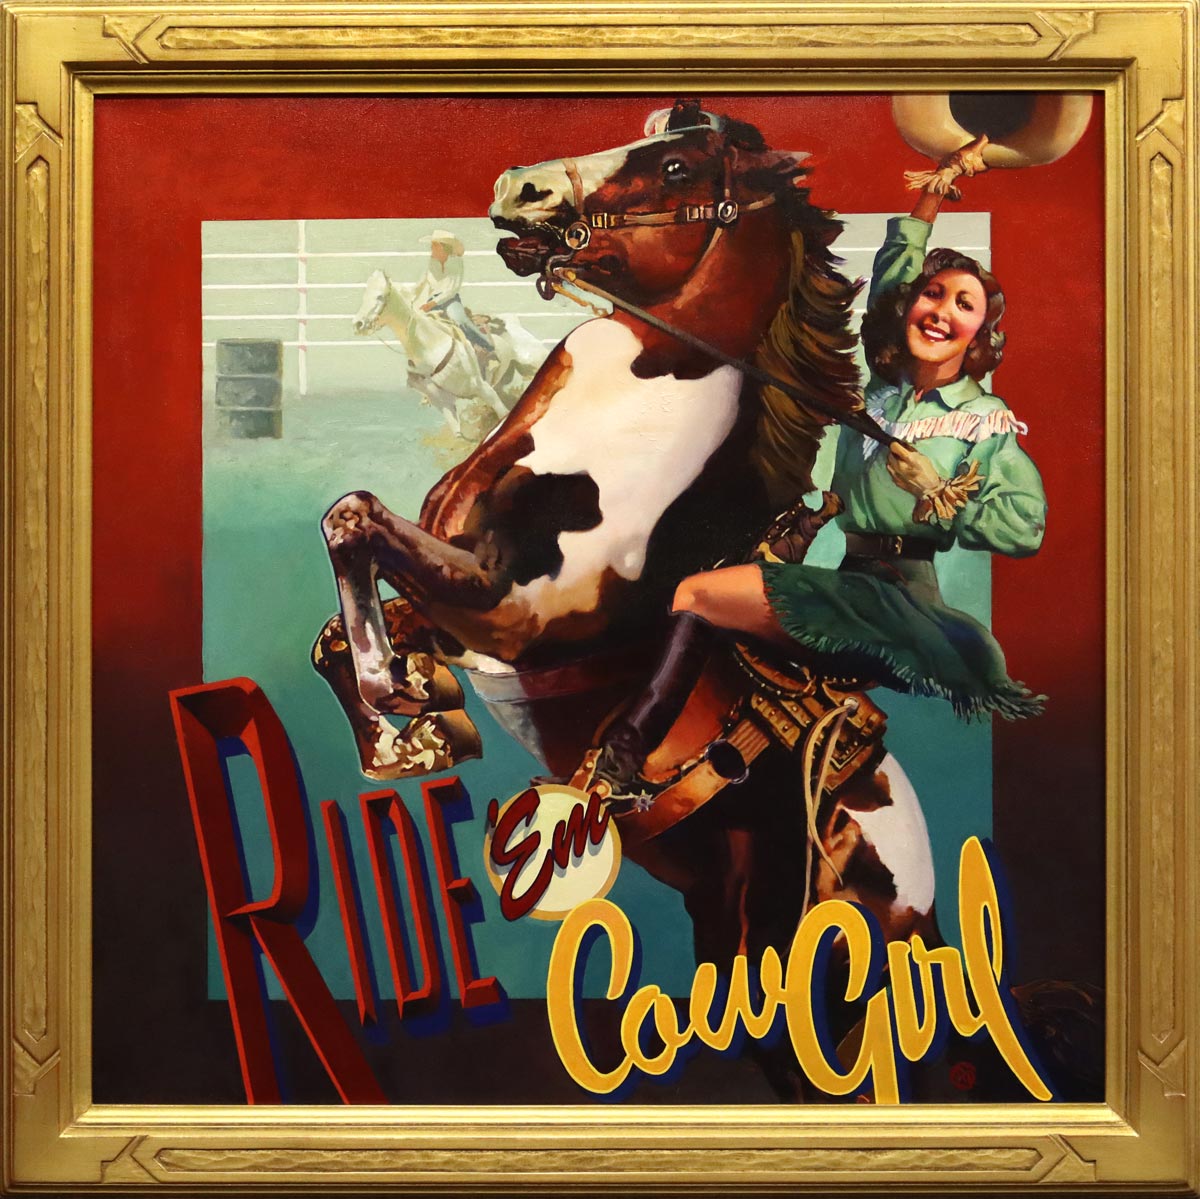 Robert Rodriquez - Ride 'Em Cowgirl (PLV91884A-0123-001)fr
